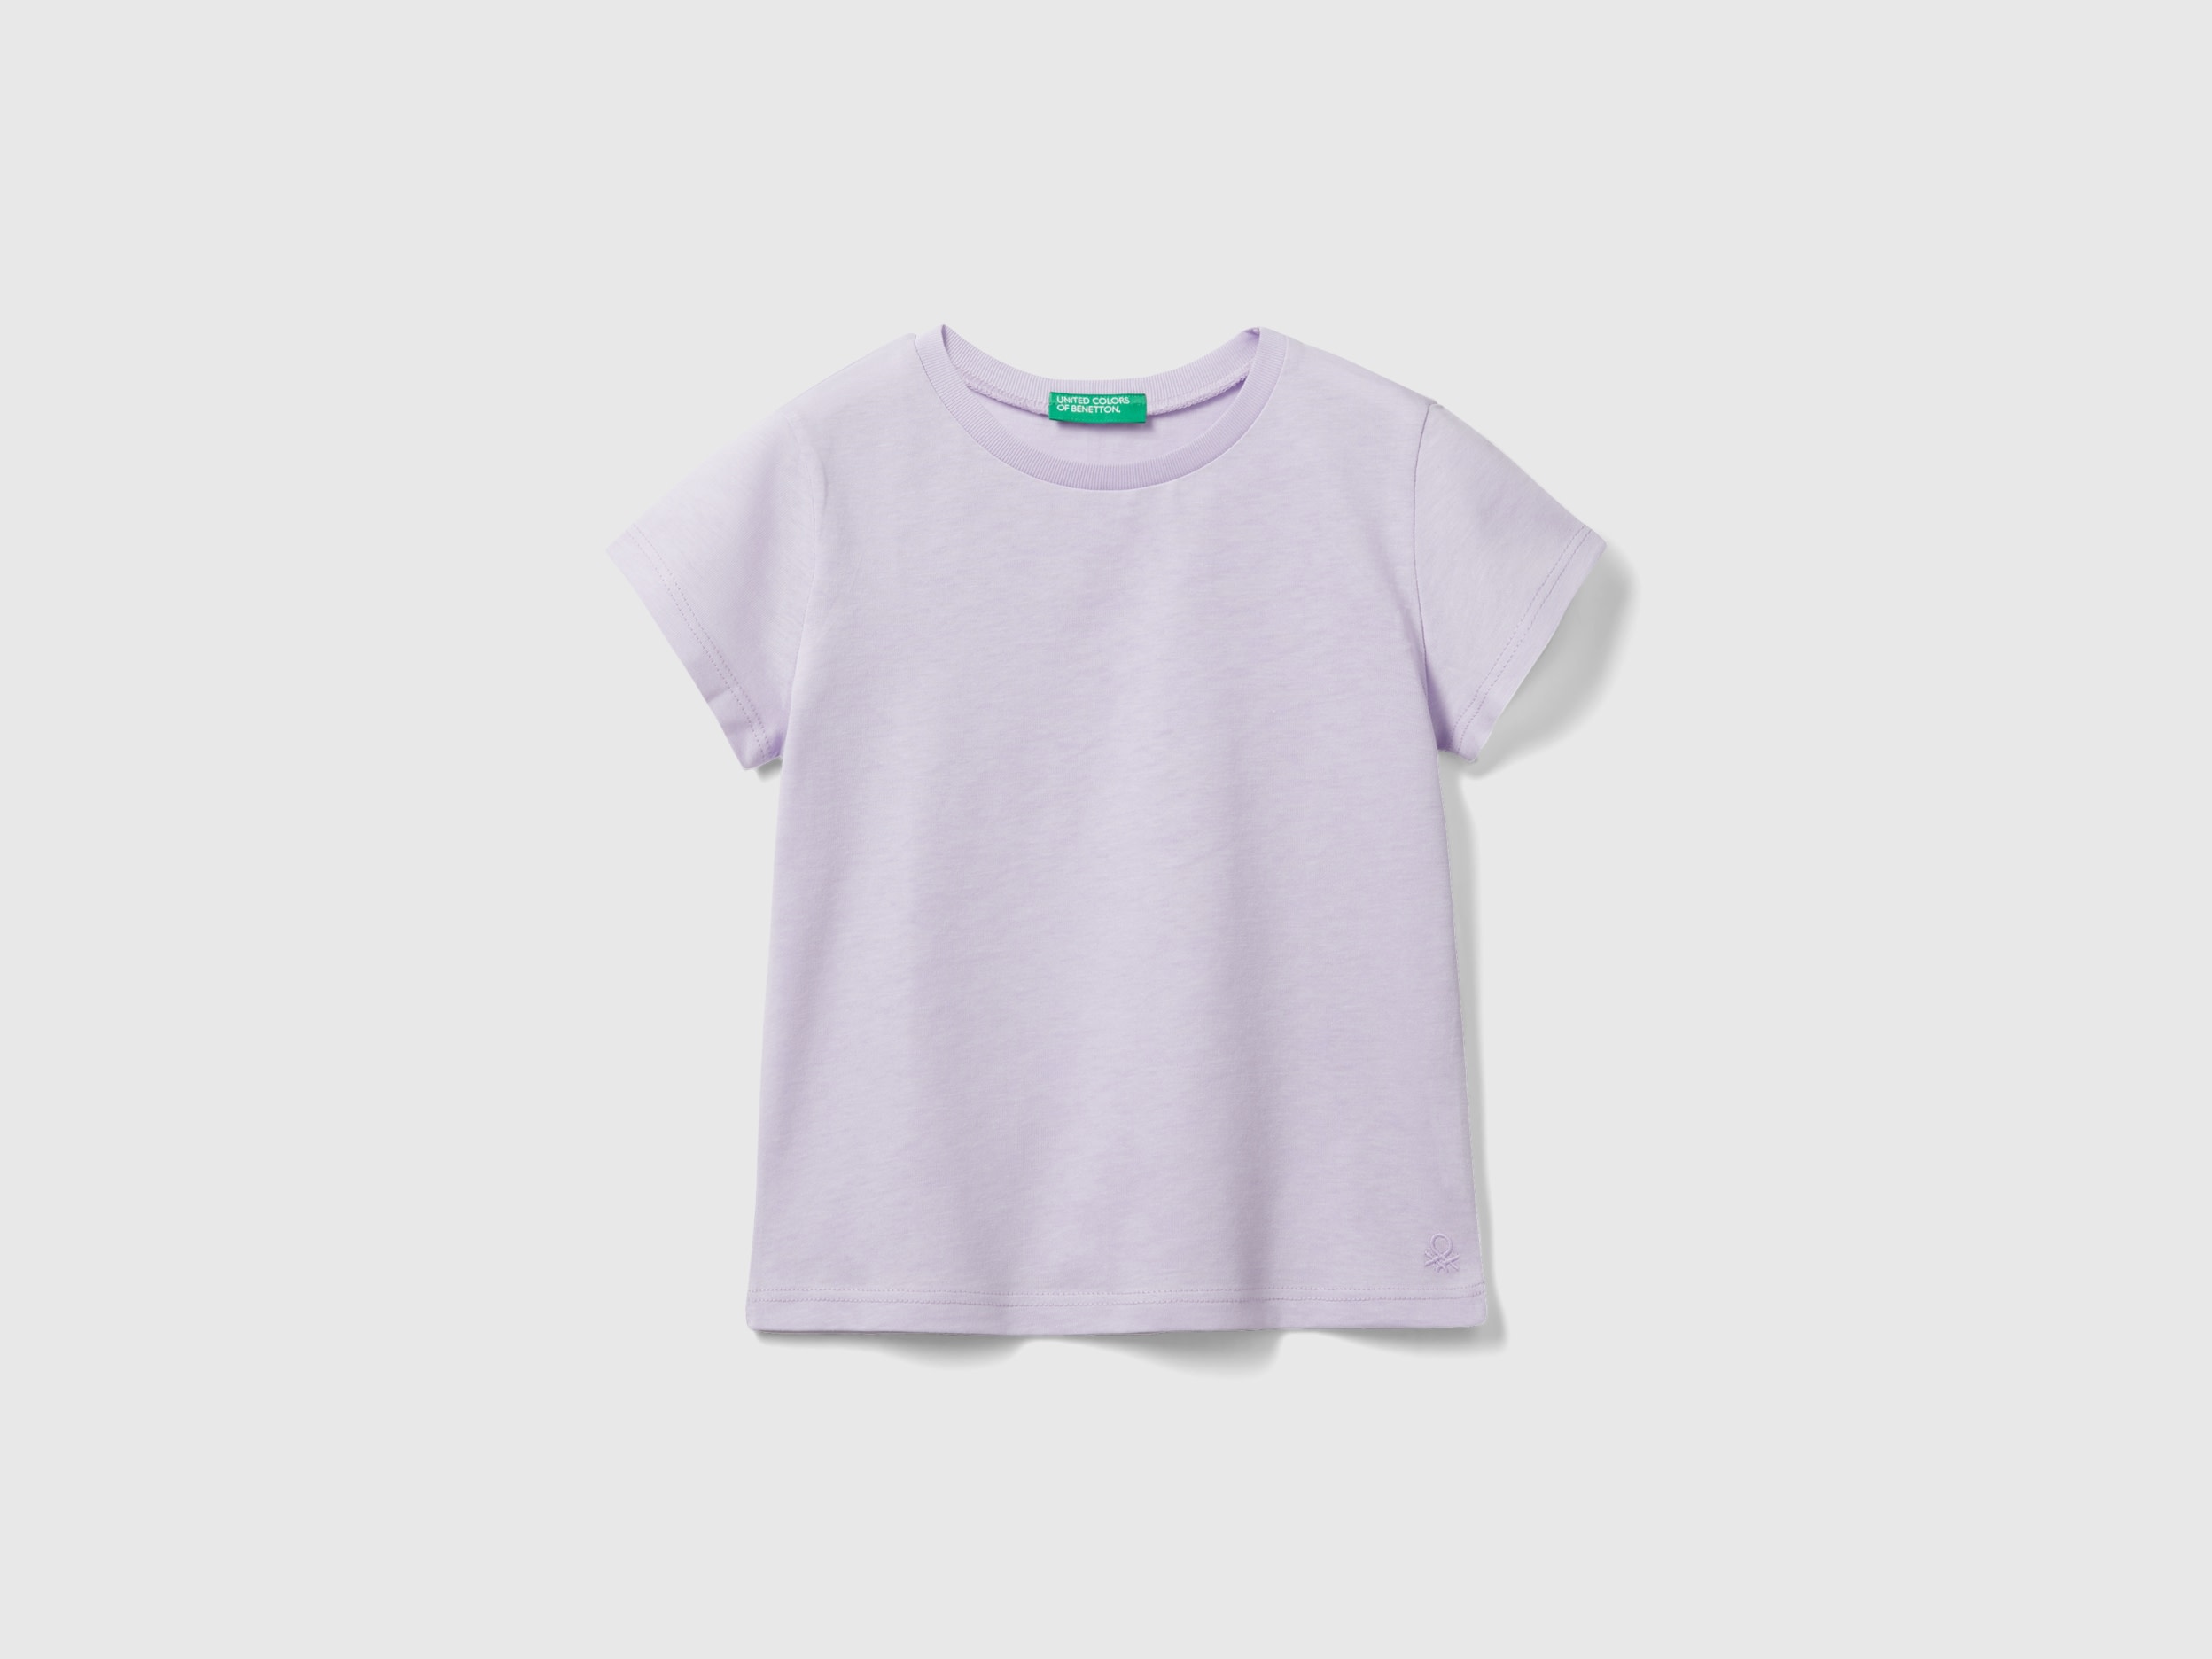 Image of Benetton, 100% Organic Cotton T-shirt, size 98, Lilac, Kids